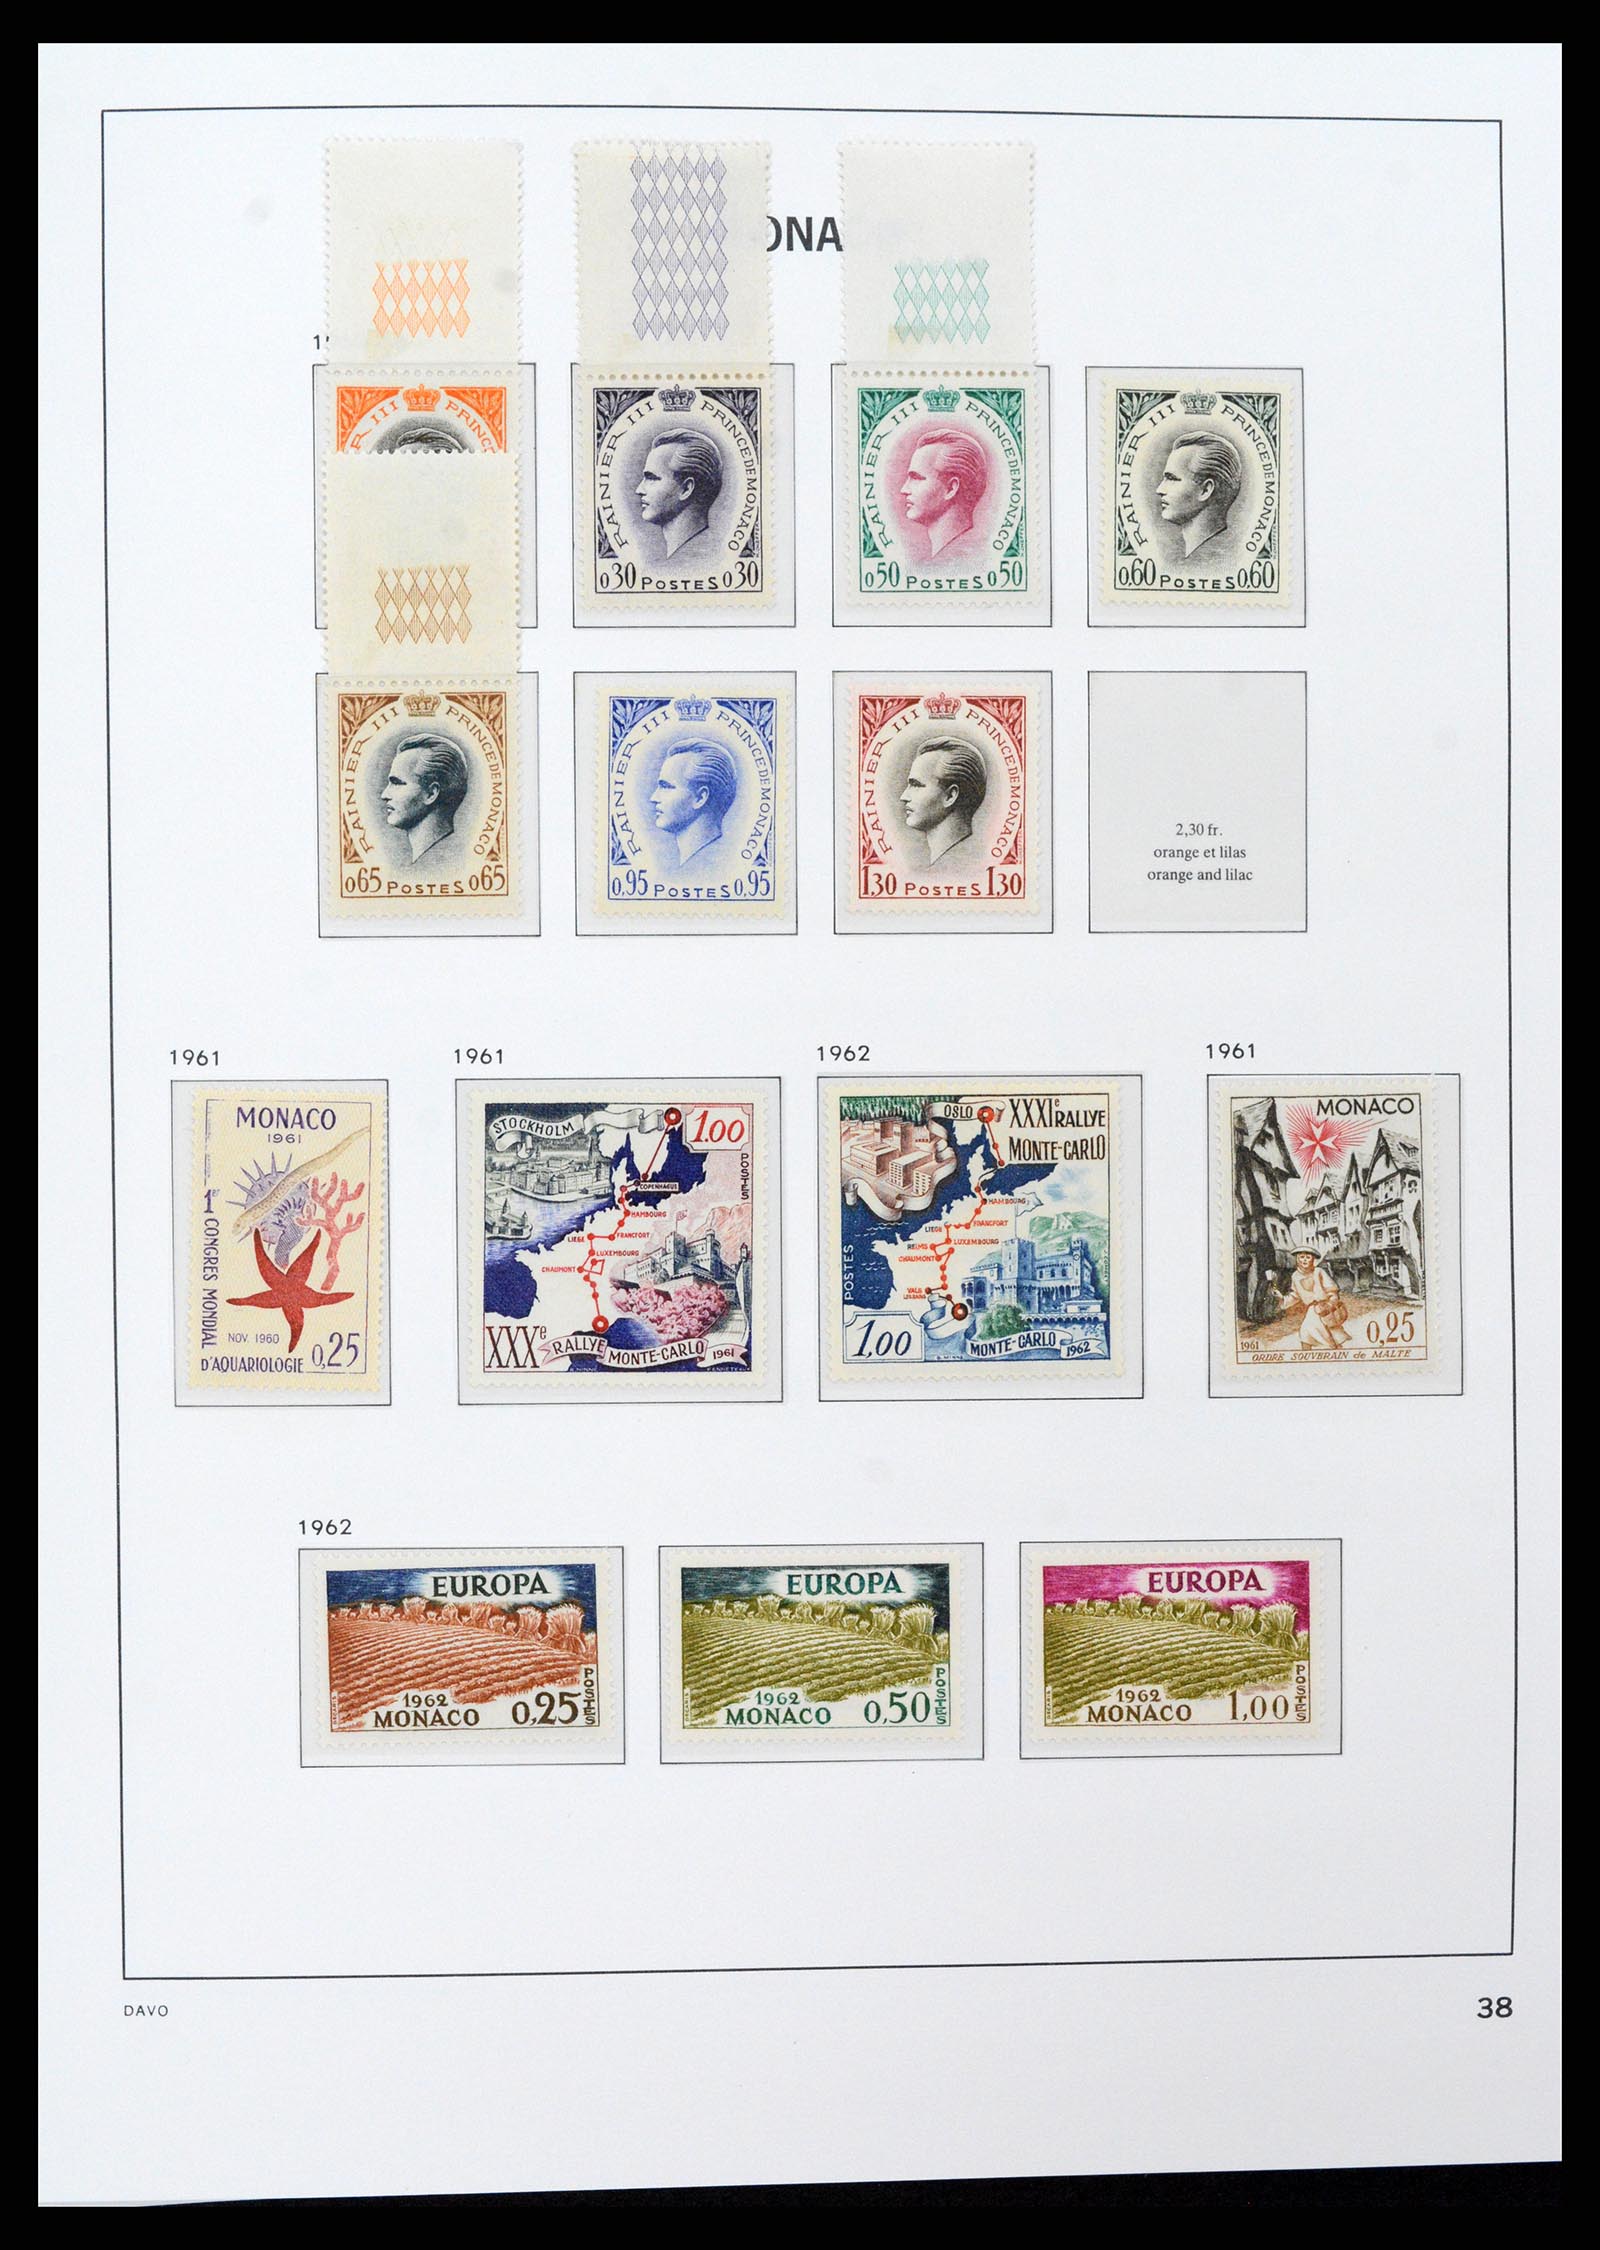 37279 038 - Stamp collection 37279 Monaco 1885-1969.